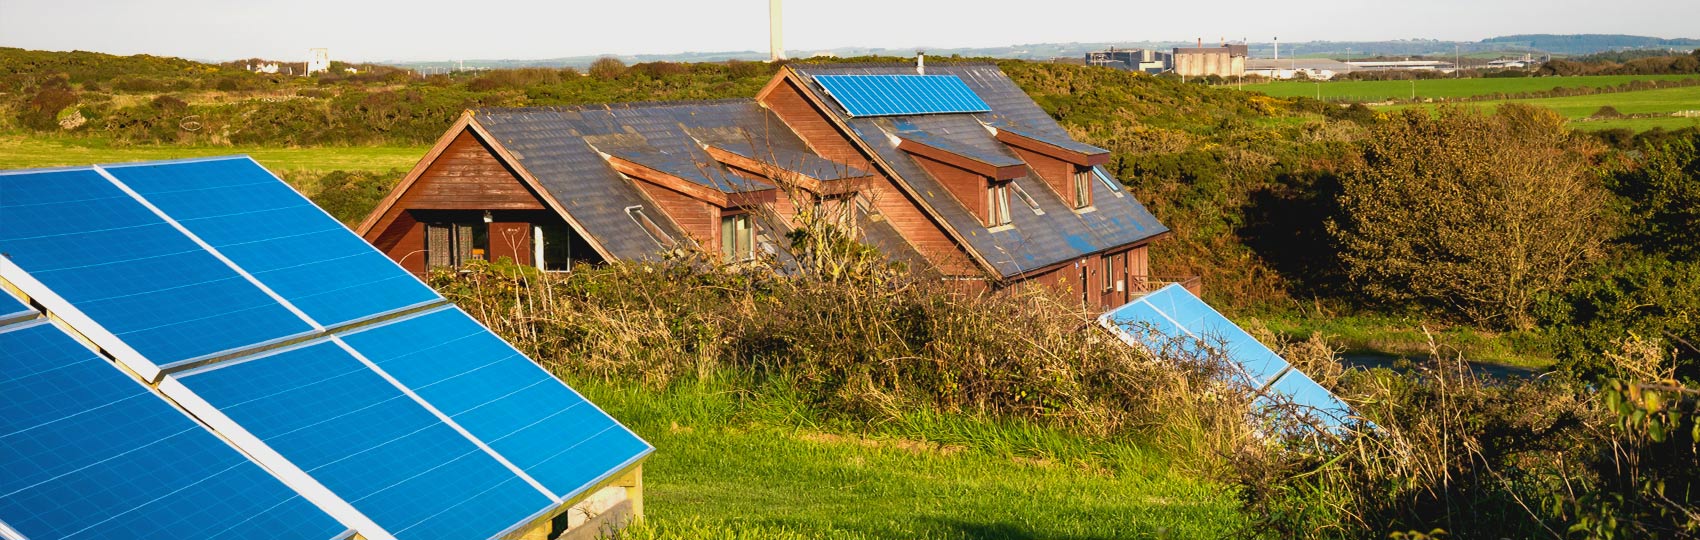 Anglesey Outdoor Centre Solar Farm